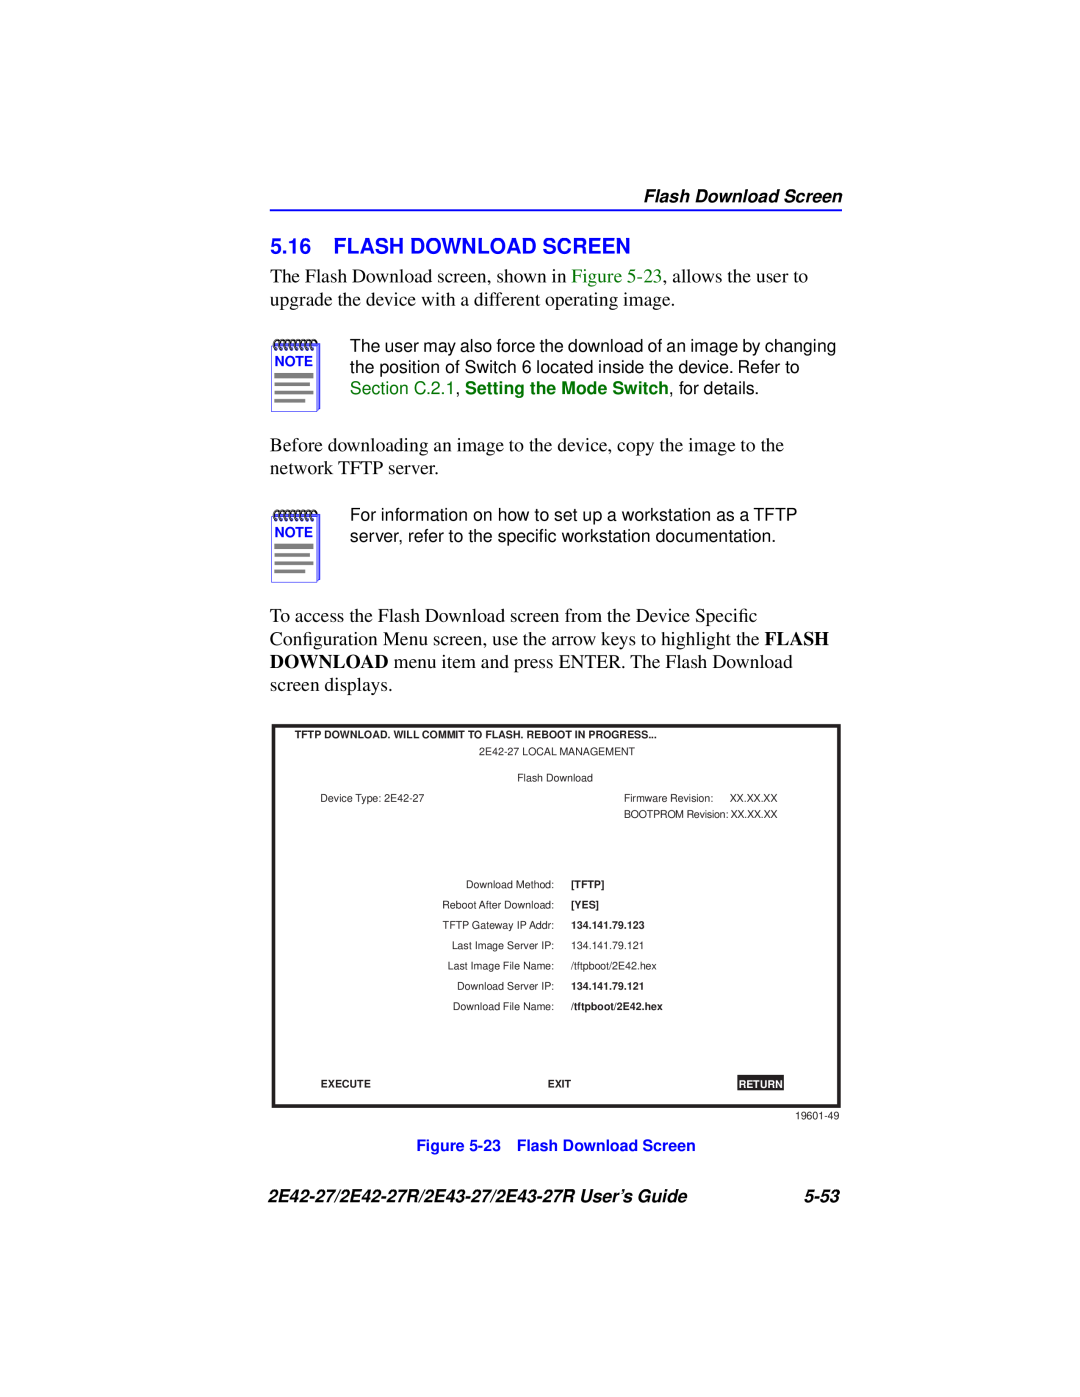 Cabletron Systems 2E43-27R, 2E42-27R manual 23 Flash Download Screen 